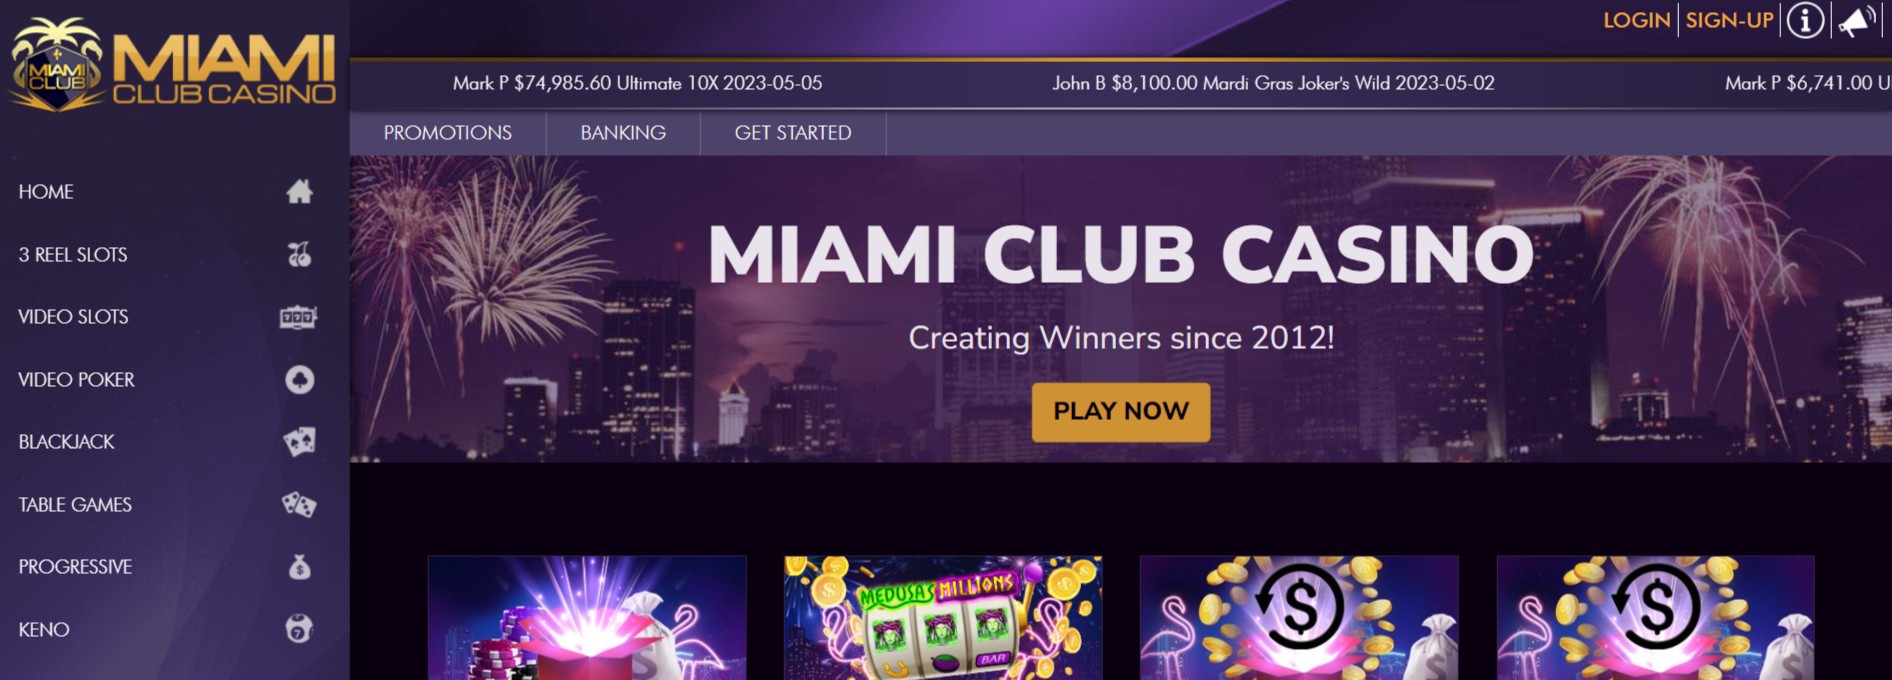 miami club casino website homepage screenshot